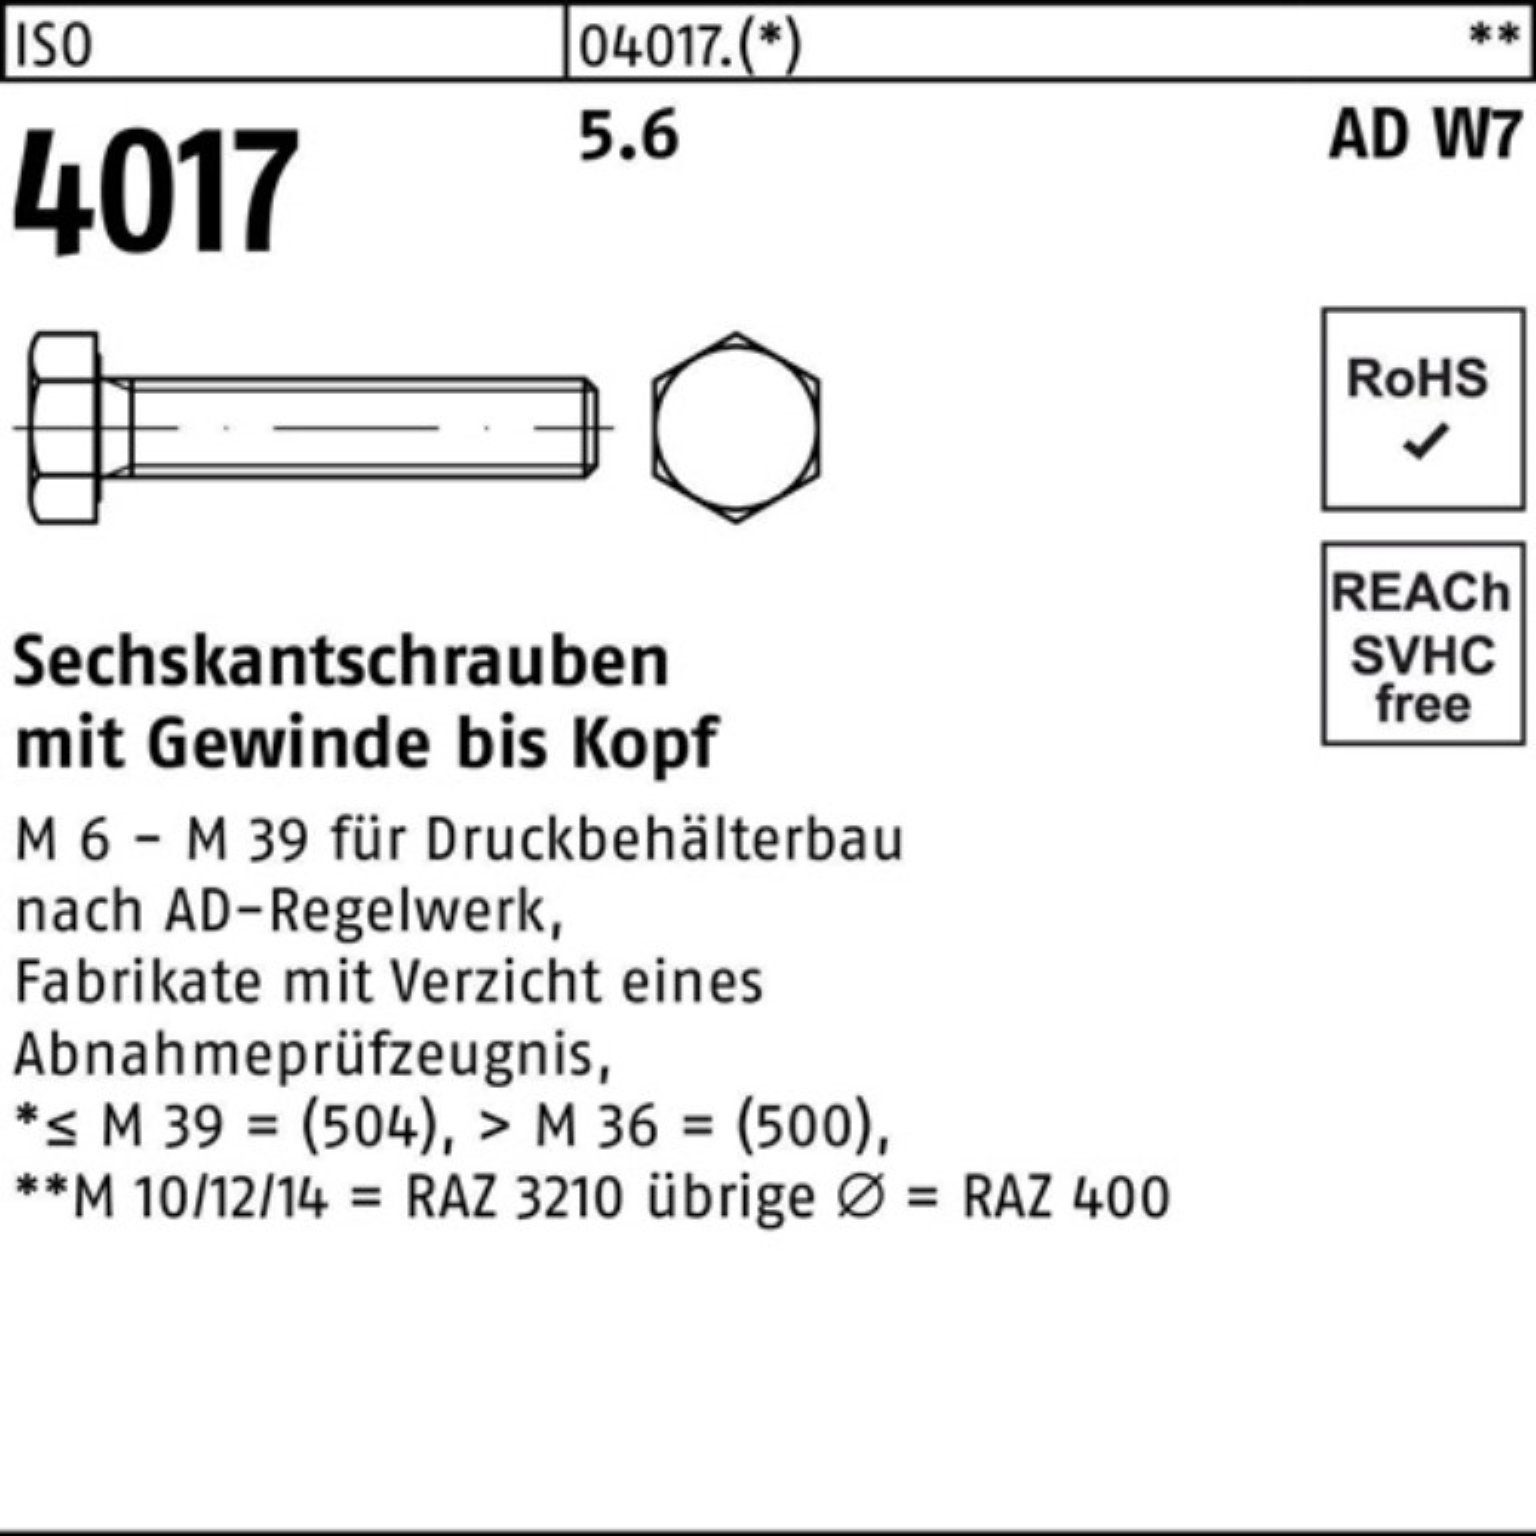 VG ISO 65 M30x IS Sechskantschraube Pack 4017 Stück W7 AD Bufab Sechskantschraube 5.6 100er 1